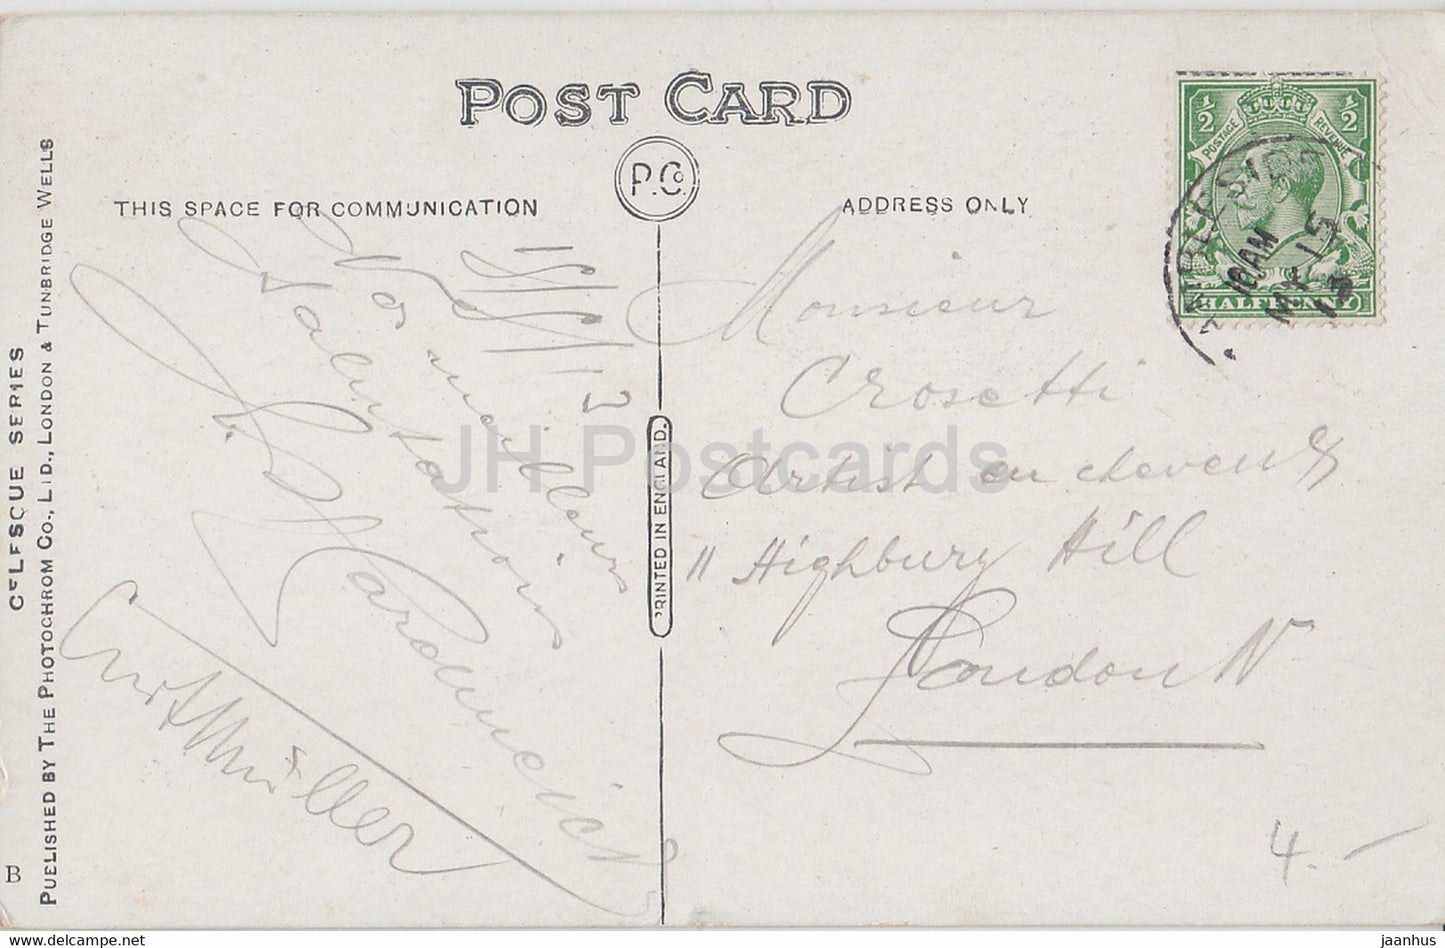 Ambleside - Old Mill - 40246 - carte postale ancienne - 1913 - Angleterre - Royaume-Uni - utilisé